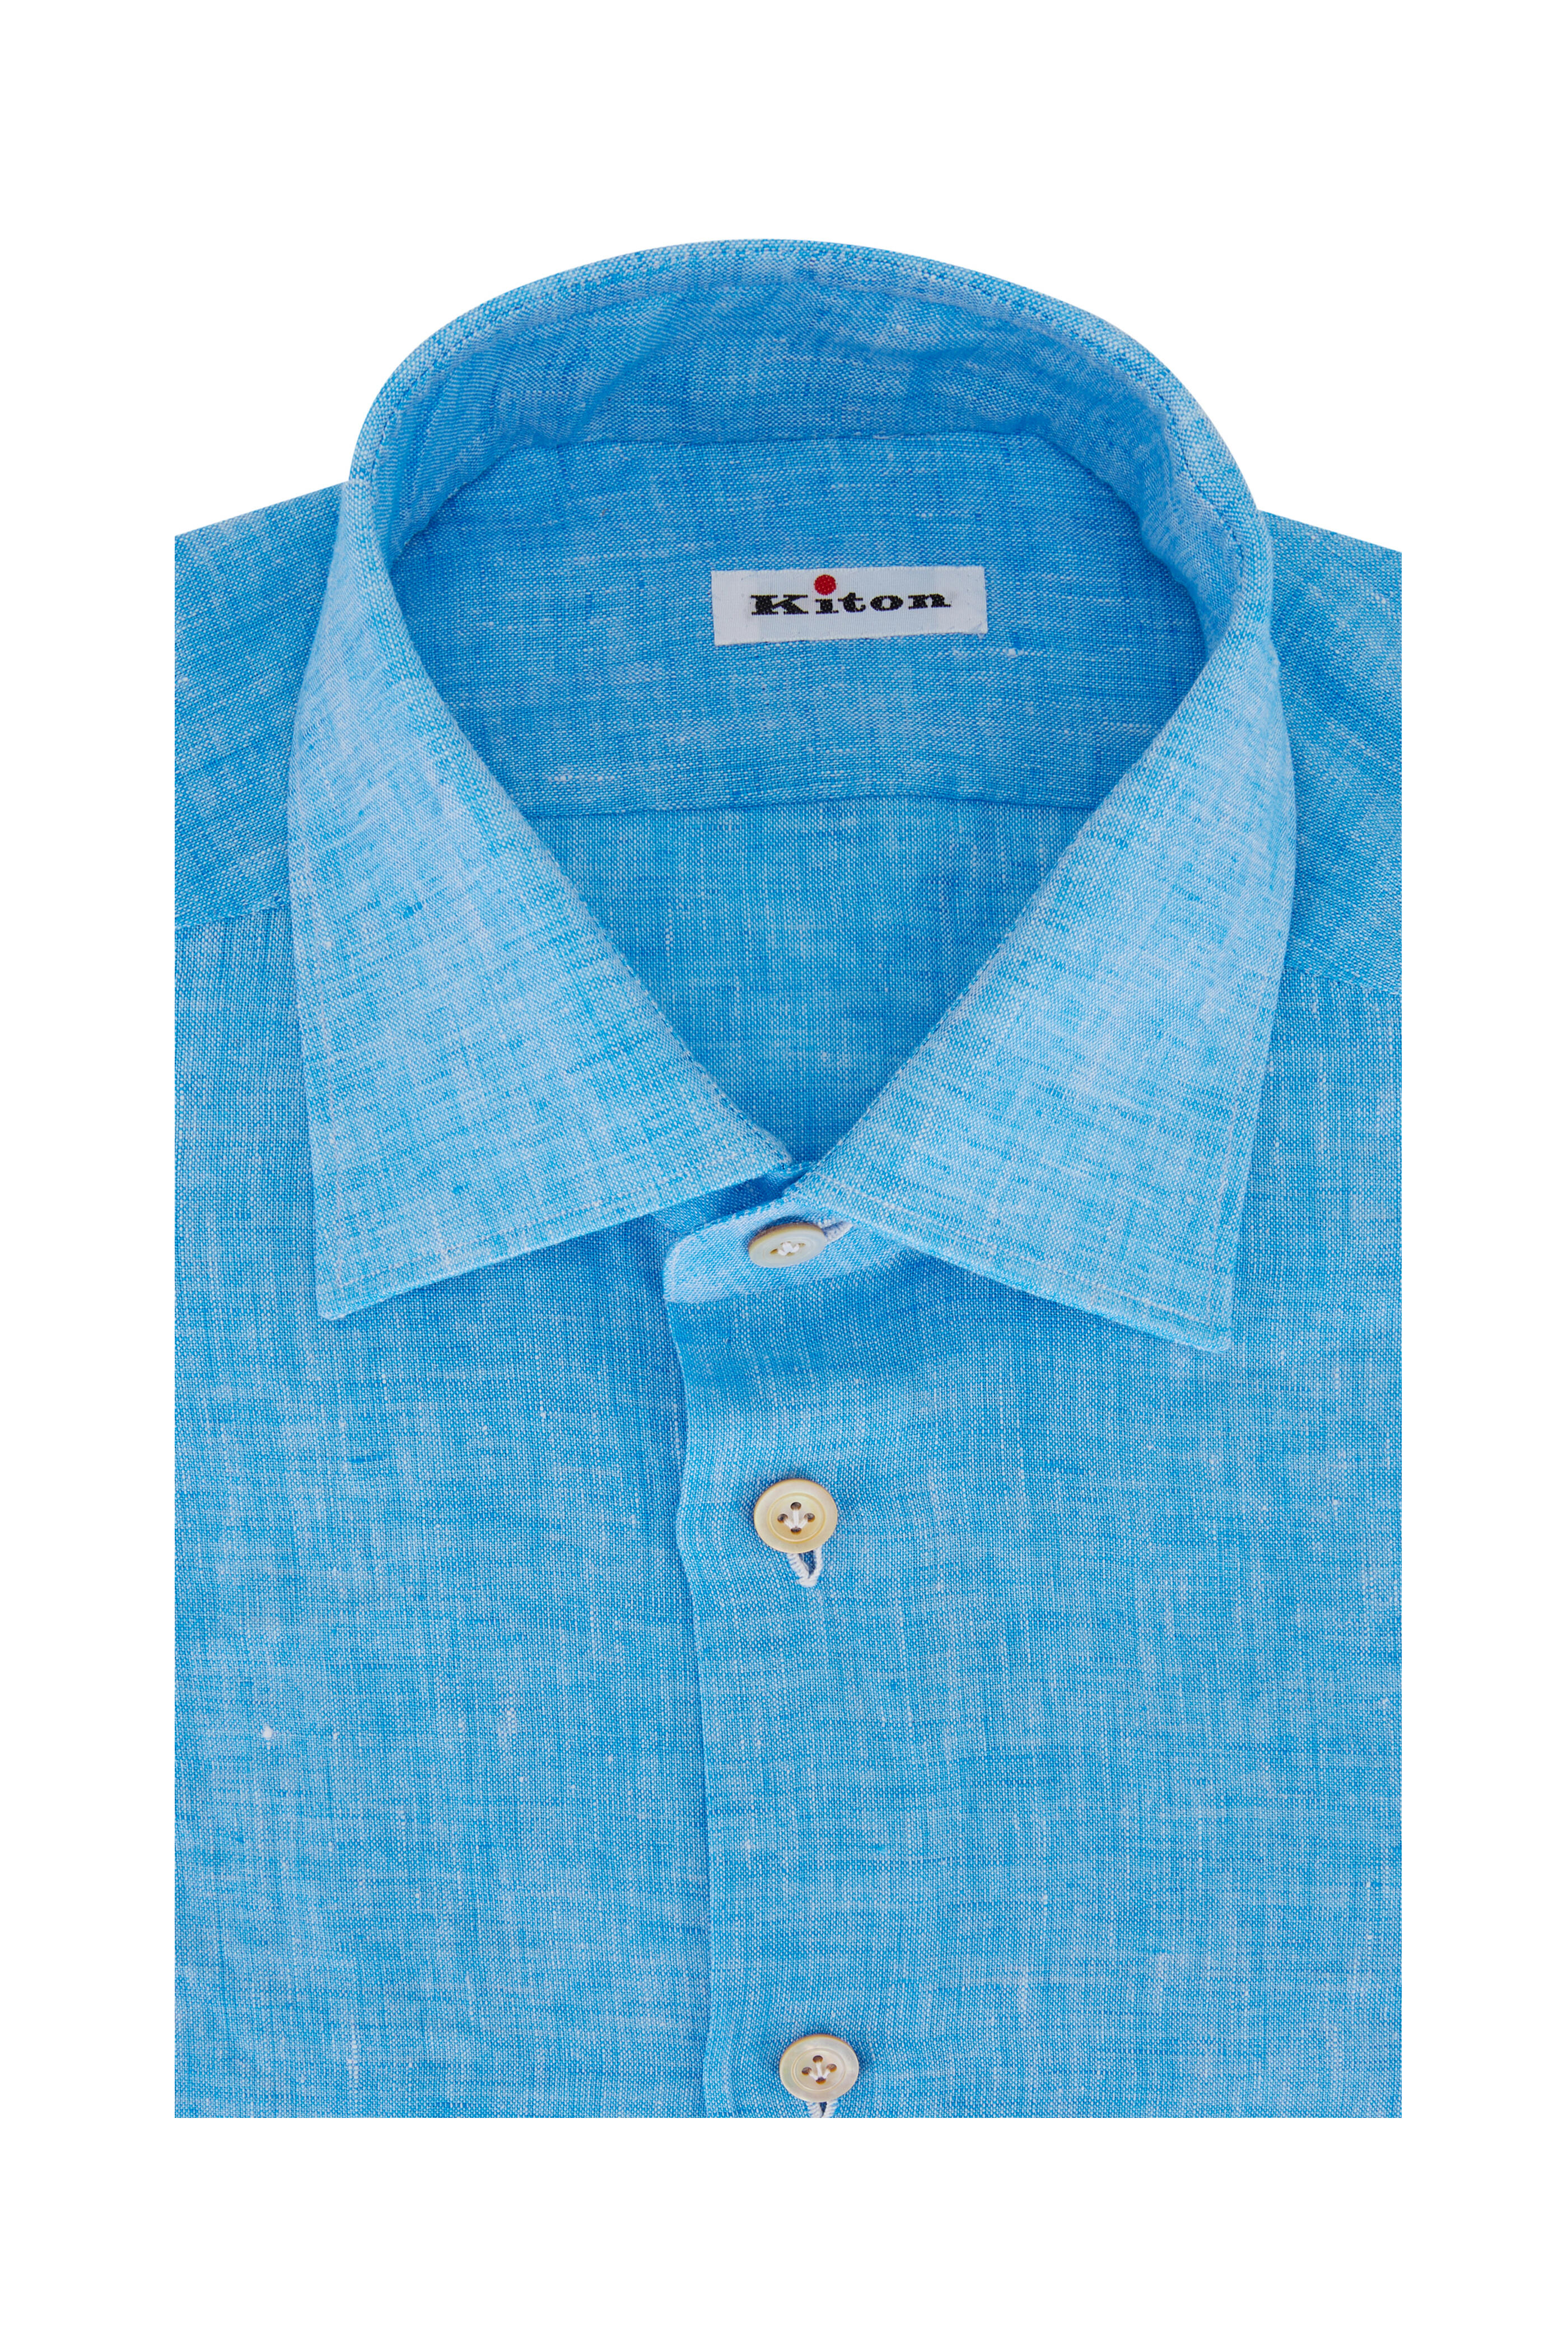 Kiton spread-collar linen shirt - Blue